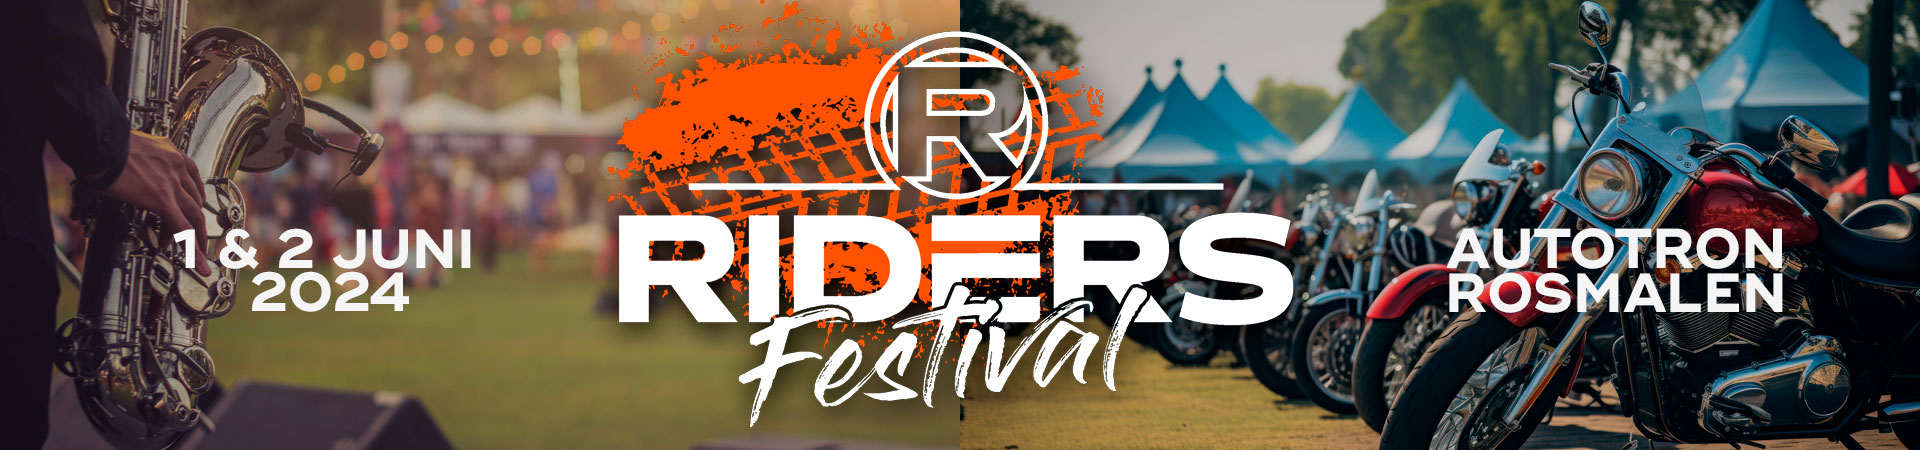 Riders Festival 2024